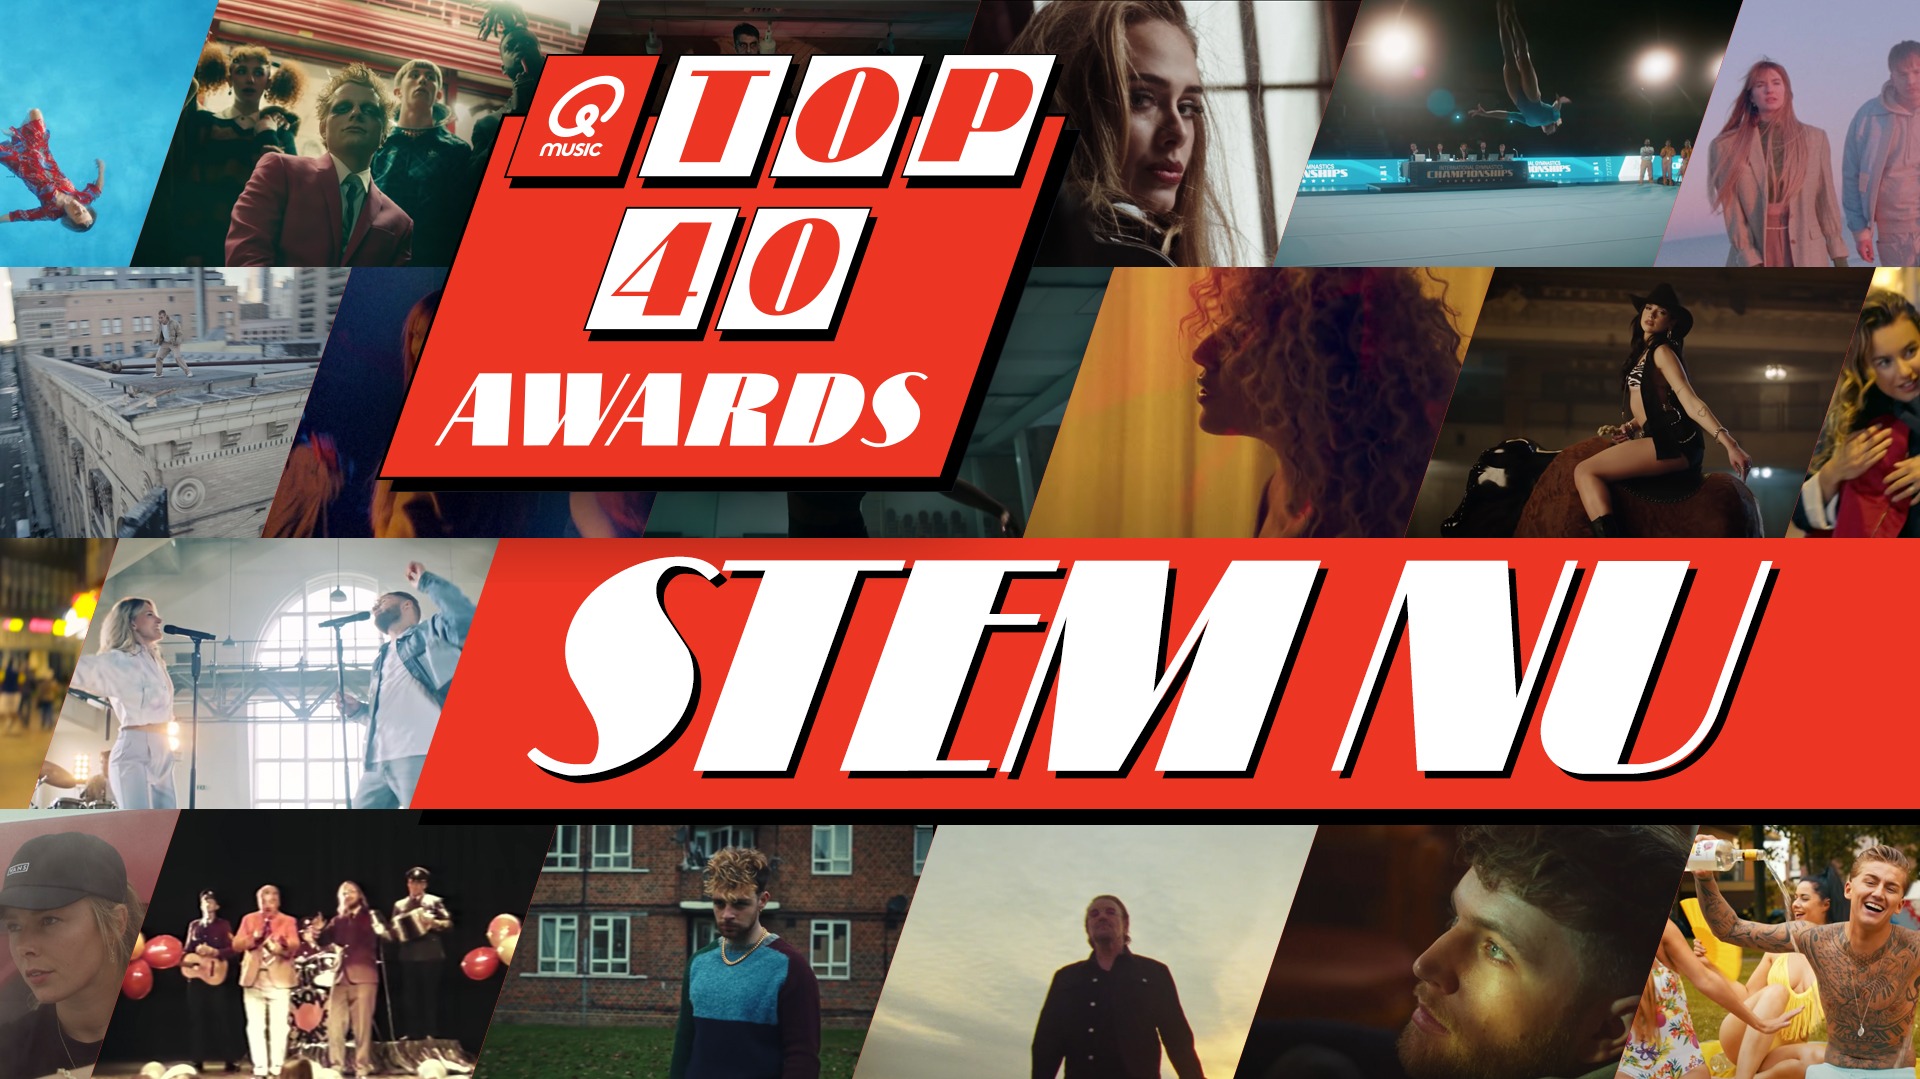 Top40 awards actiepagina stemmen v01